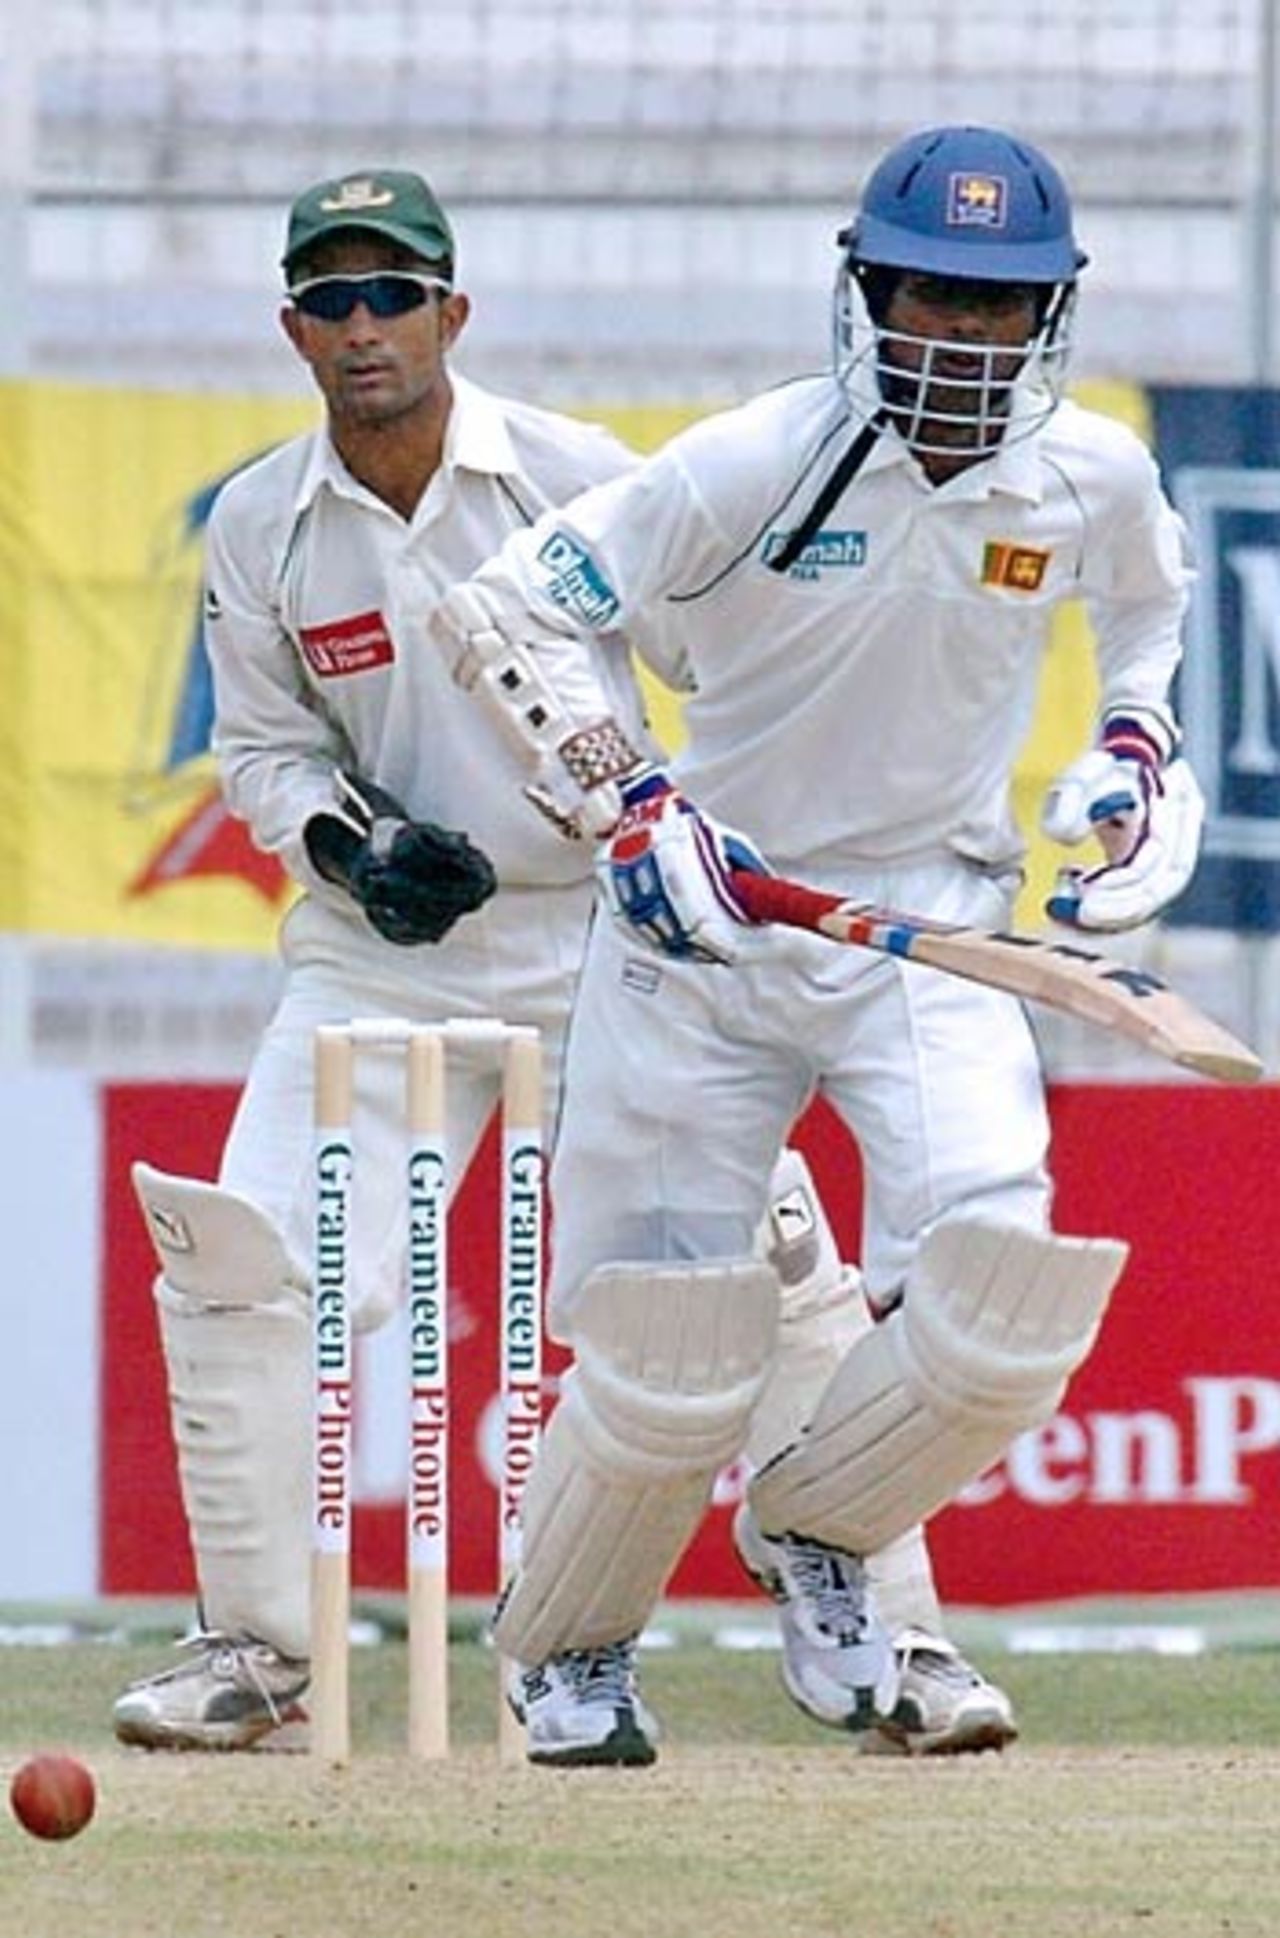 Upul Tharanga on drives enroute to a century, Bangladesh v Sri Lanka, 2nd Test, Bogra, 2nd day, March 9, 2006